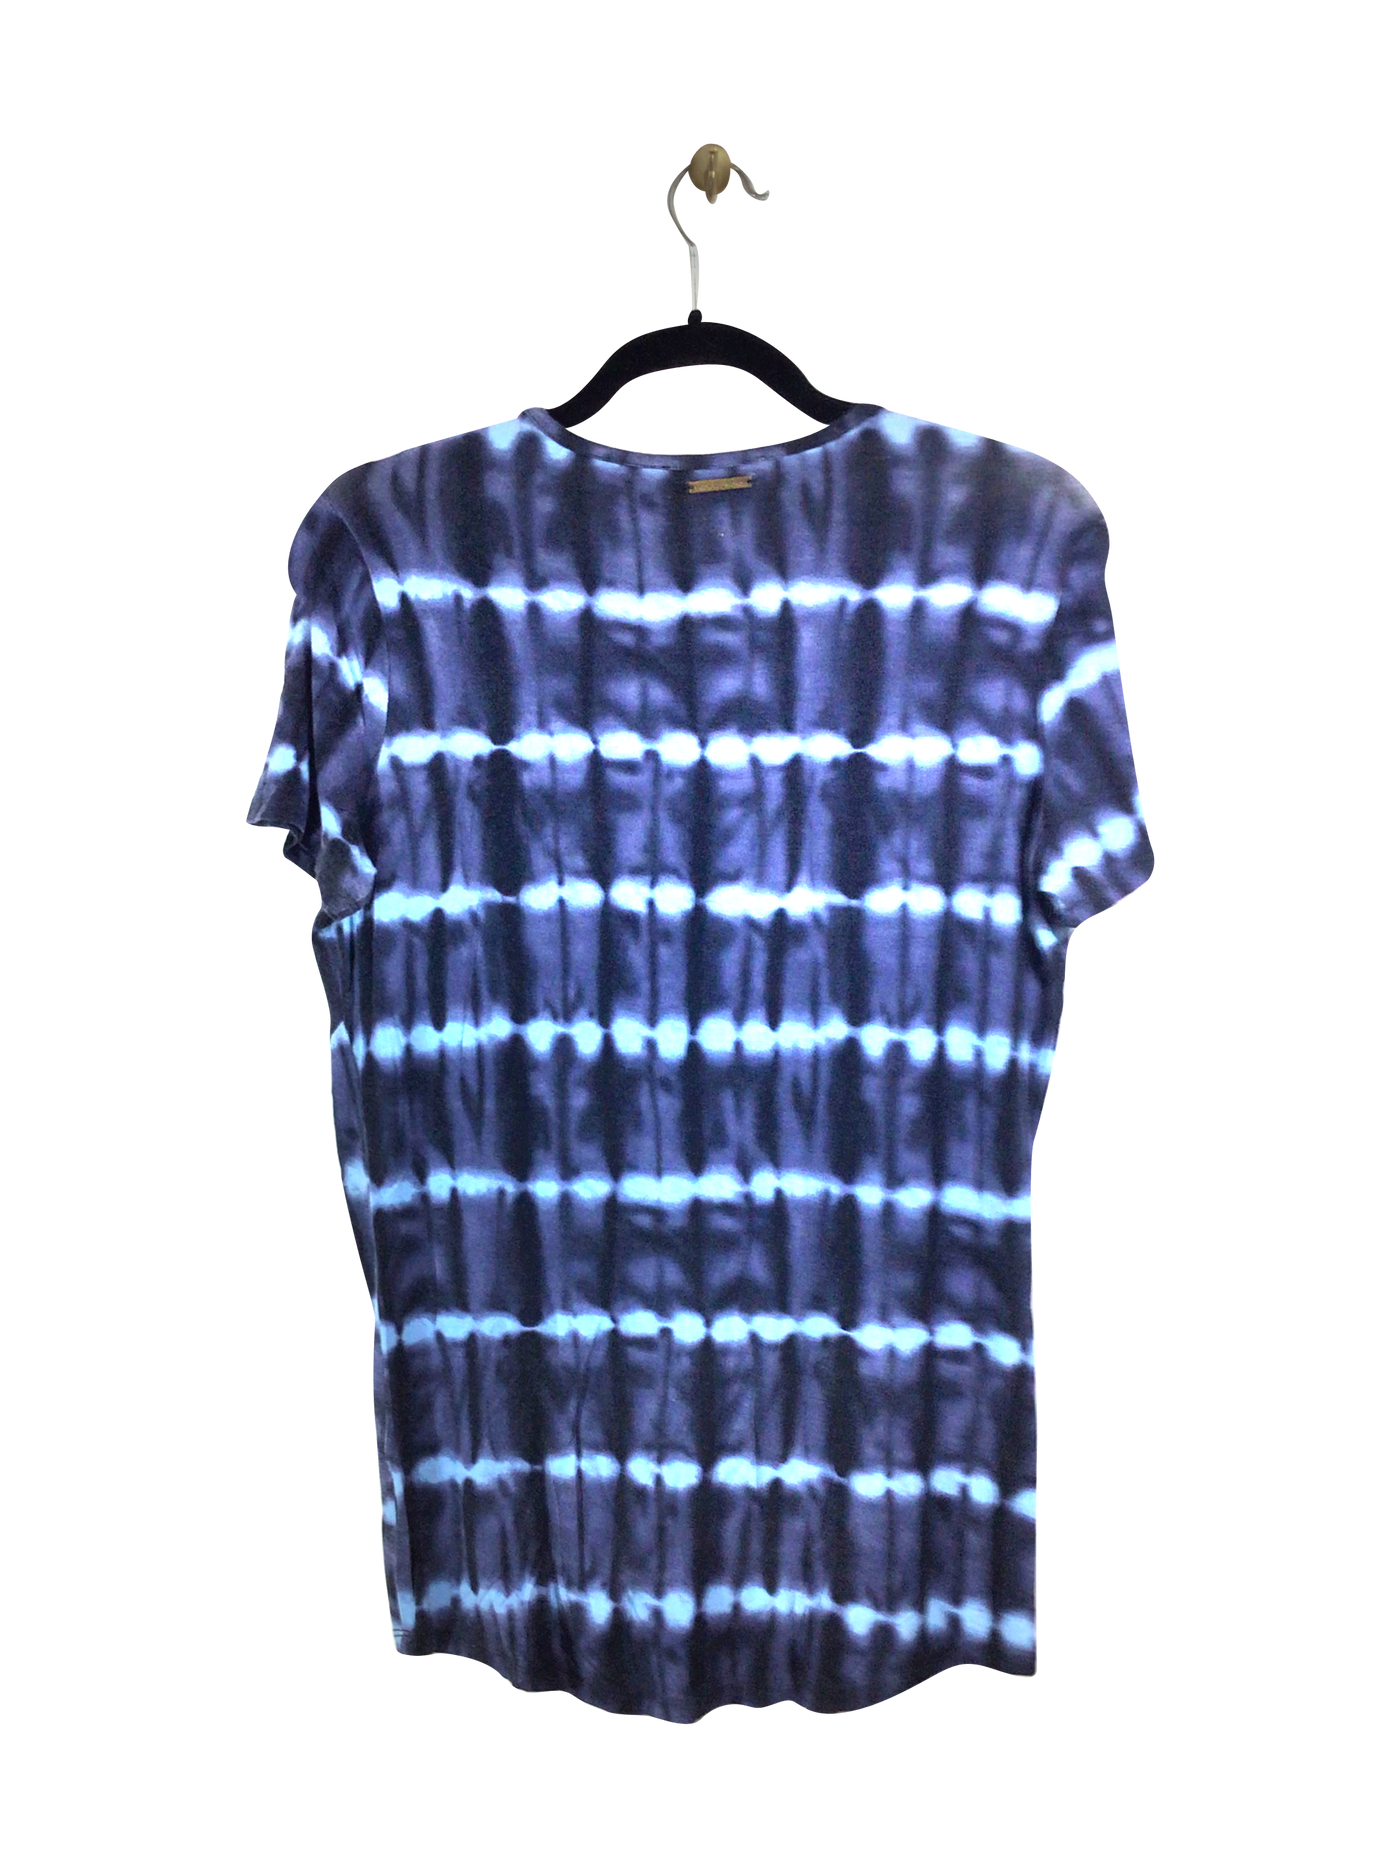 MICHAEL KORS T-shirt Regular fit in Blue - Size S | 65 $ KOOP